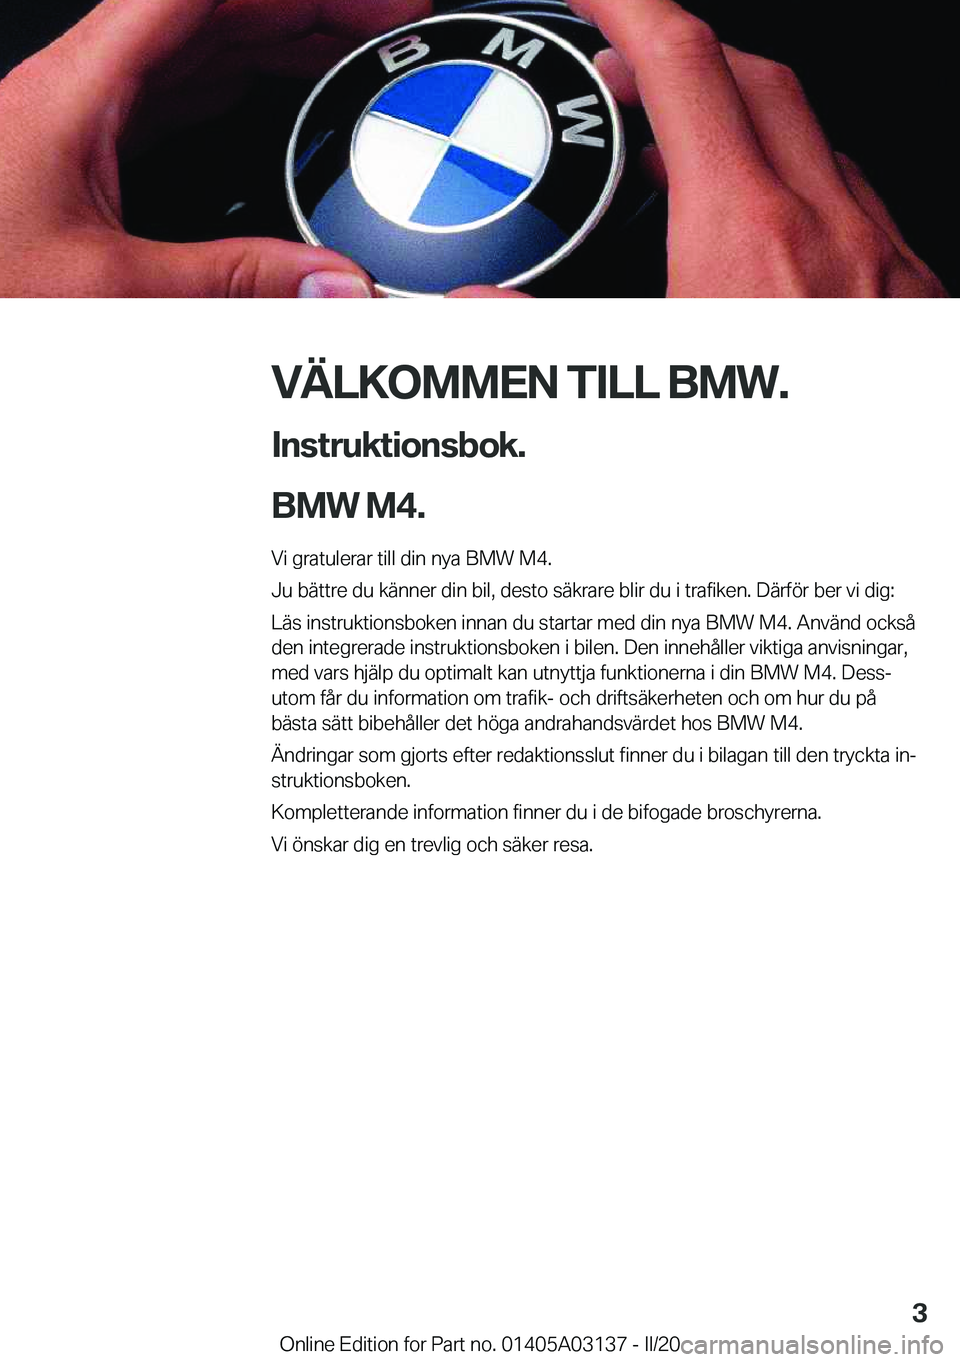 BMW M4 2020  InstruktionsbÖcker (in Swedish) �V�Ä�L�K�O�M�M�E�N��T�I�L�L��B�M�W�.�I�n�s�t�r�u�k�t�i�o�n�s�b�o�k�.
�B�M�W��M�4�.
�V�i��g�r�a�t�u�l�e�r�a�r��t�i�l�l��d�i�n��n�y�a��B�M�W��M�4�.
�J�u��b�ä�t�t�r�e��d�u��k�ä�n�n�e�r��d